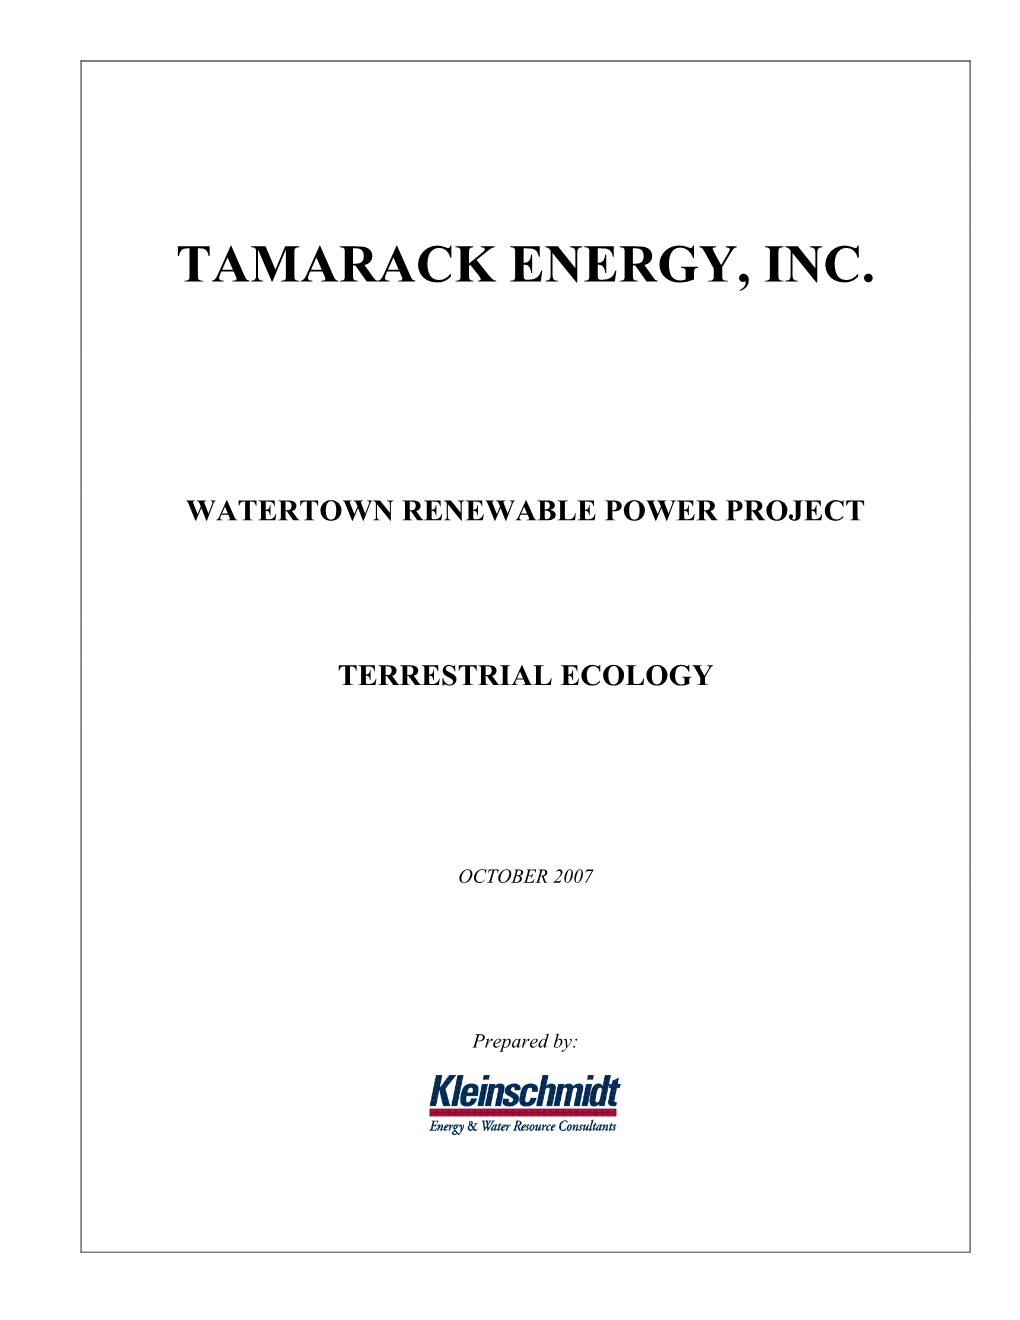 Tamarack Energy, Inc